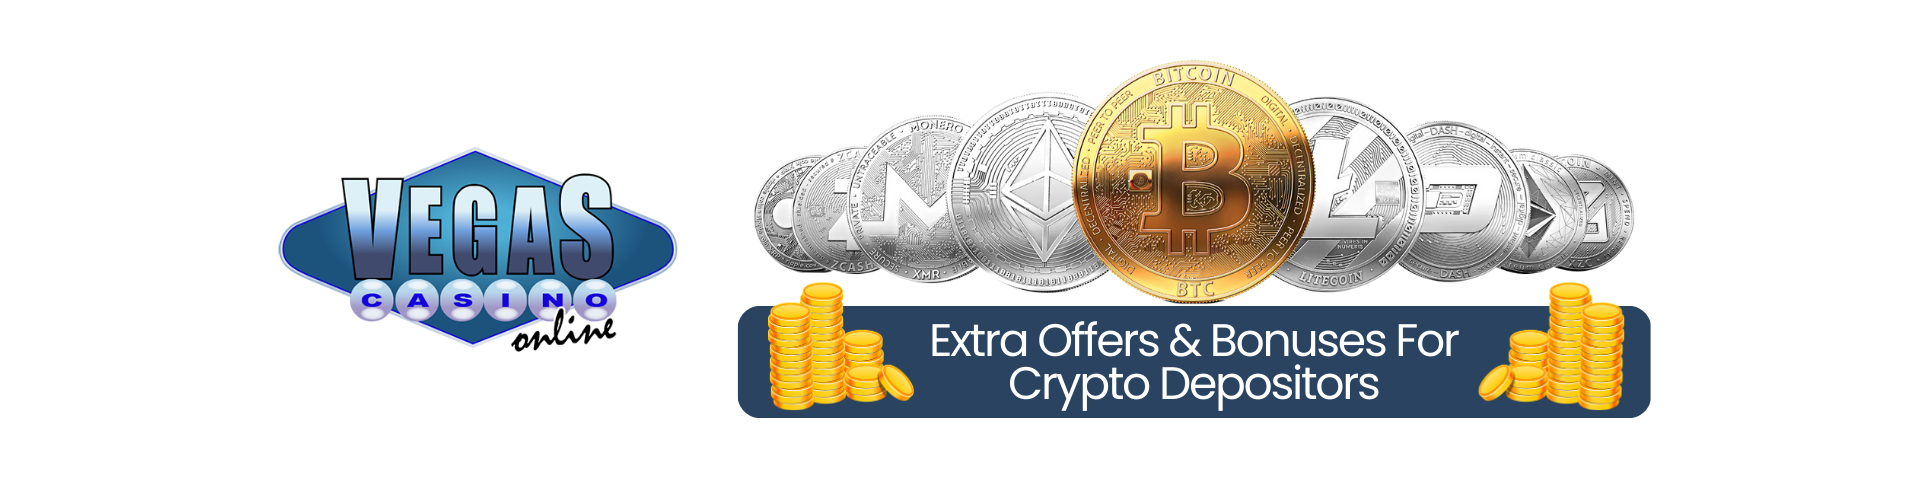 Vegas Casino Online - Extra Offers & Bonuses For Crypto Depositors